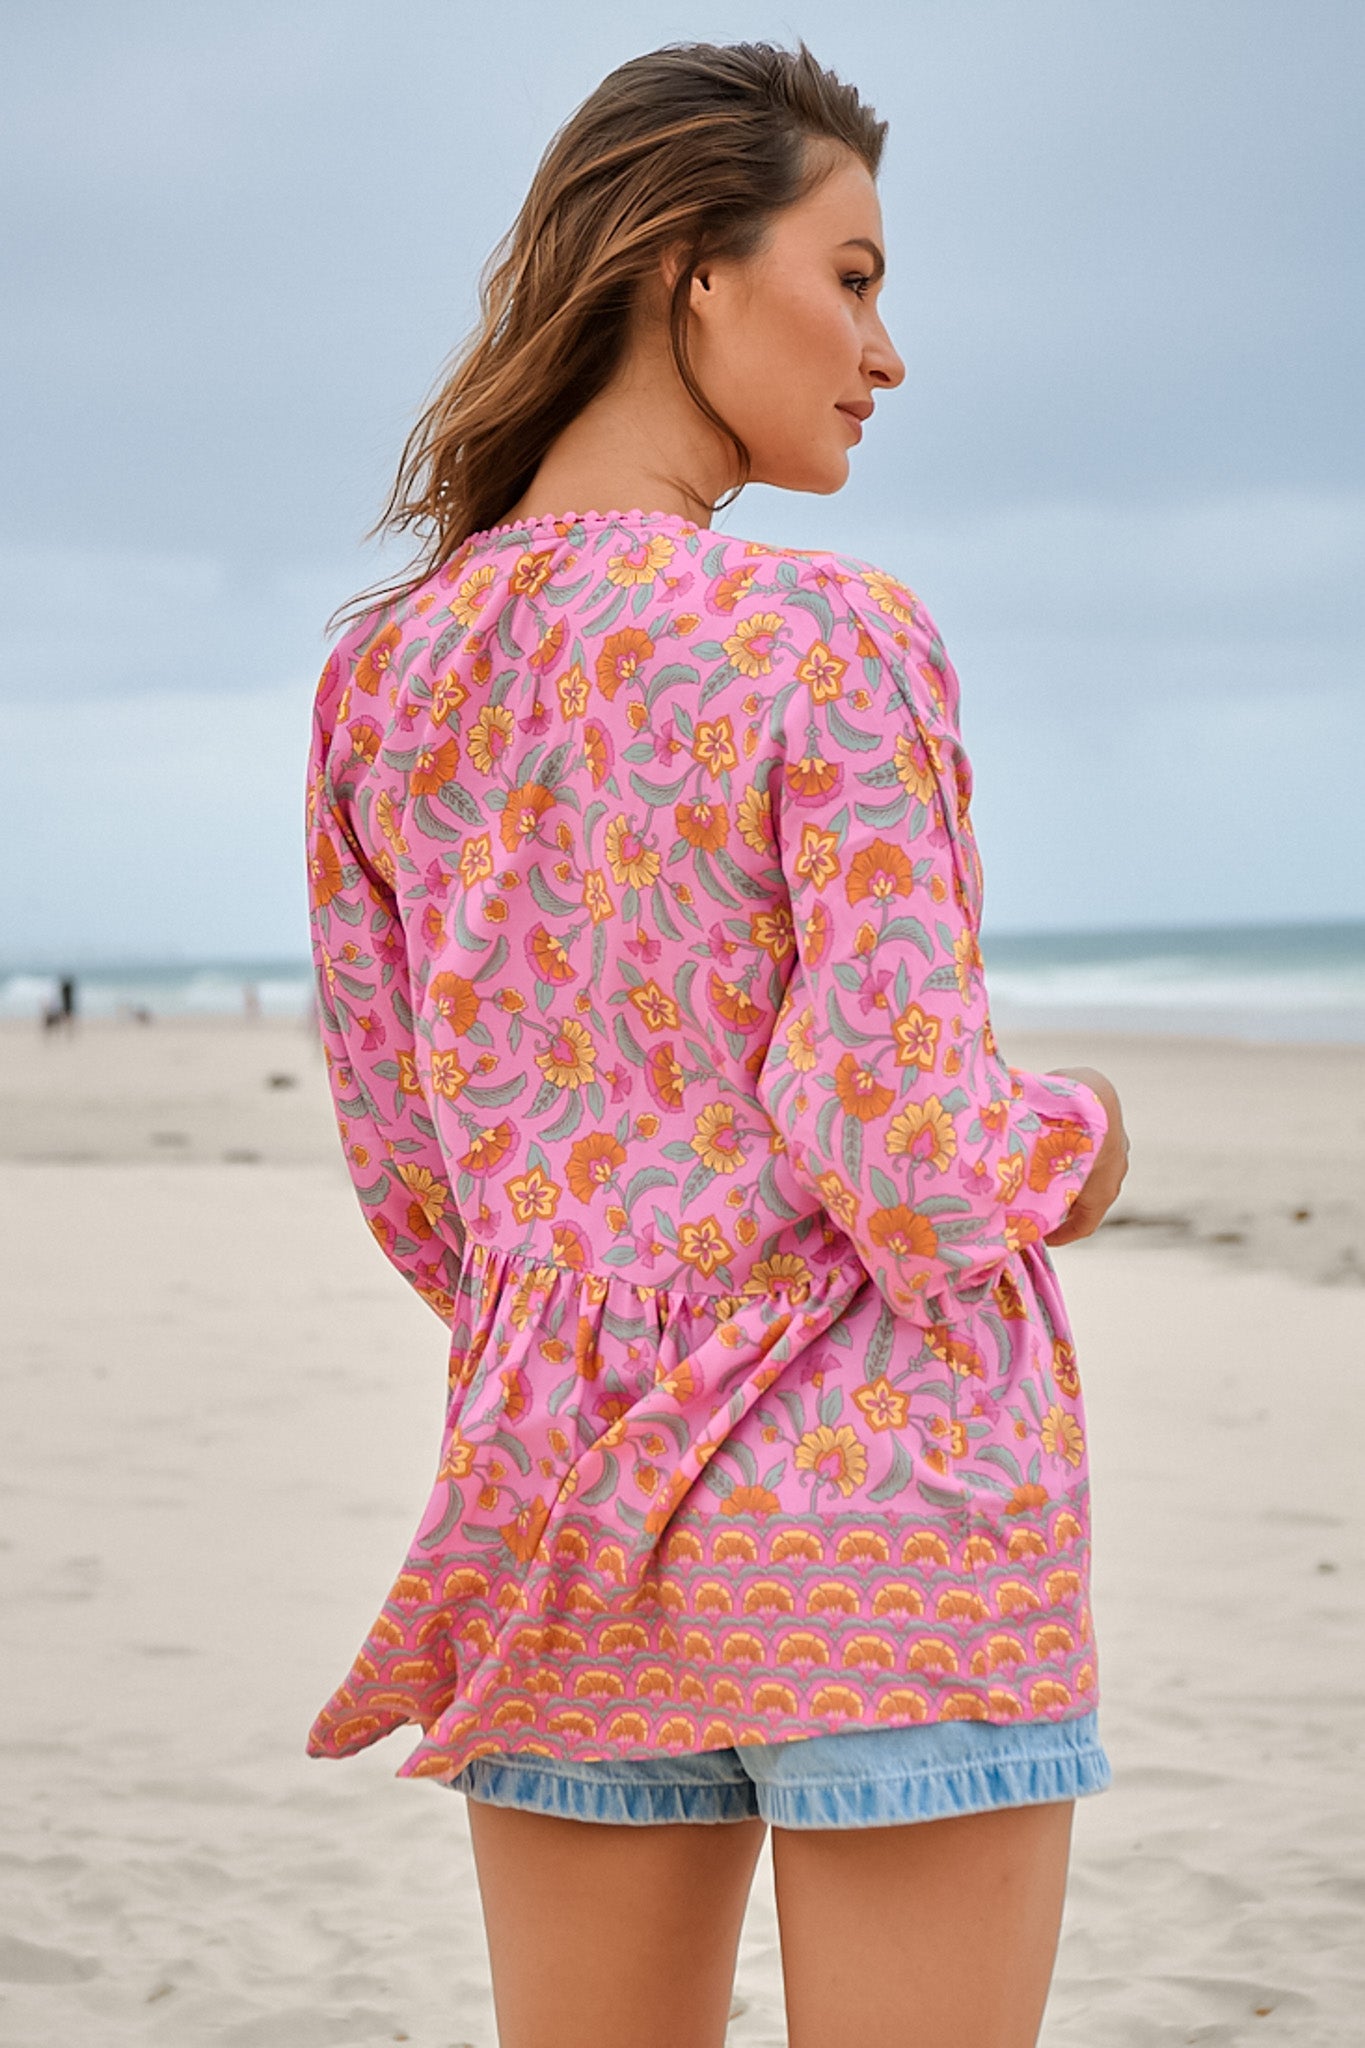 JAASE - Chloe Top: Very Oversized Crochet Trim Neckline Smock Top in Rosewater Print